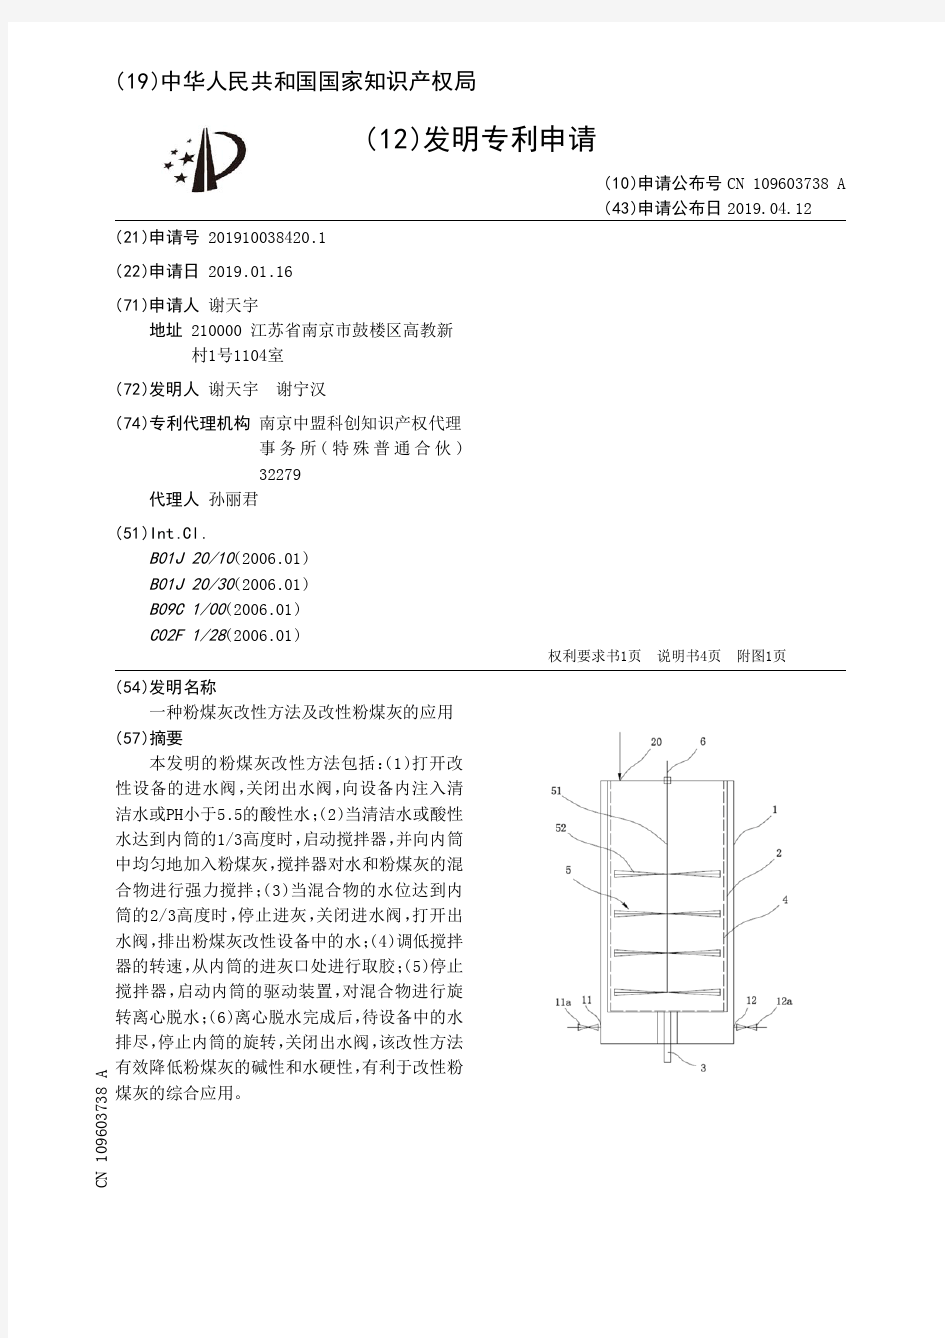 【CN109603738A】一种粉煤灰改性方法及改性粉煤灰的应用【专利】